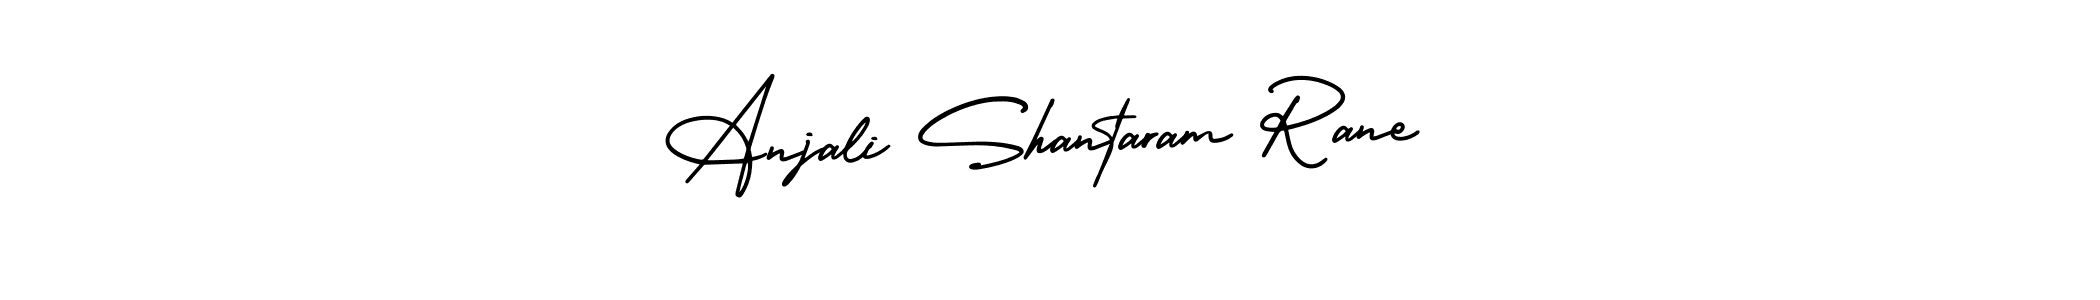 Best and Professional Signature Style for Anjali Shantaram Rane. AmerikaSignatureDemo-Regular Best Signature Style Collection. Anjali Shantaram Rane signature style 3 images and pictures png